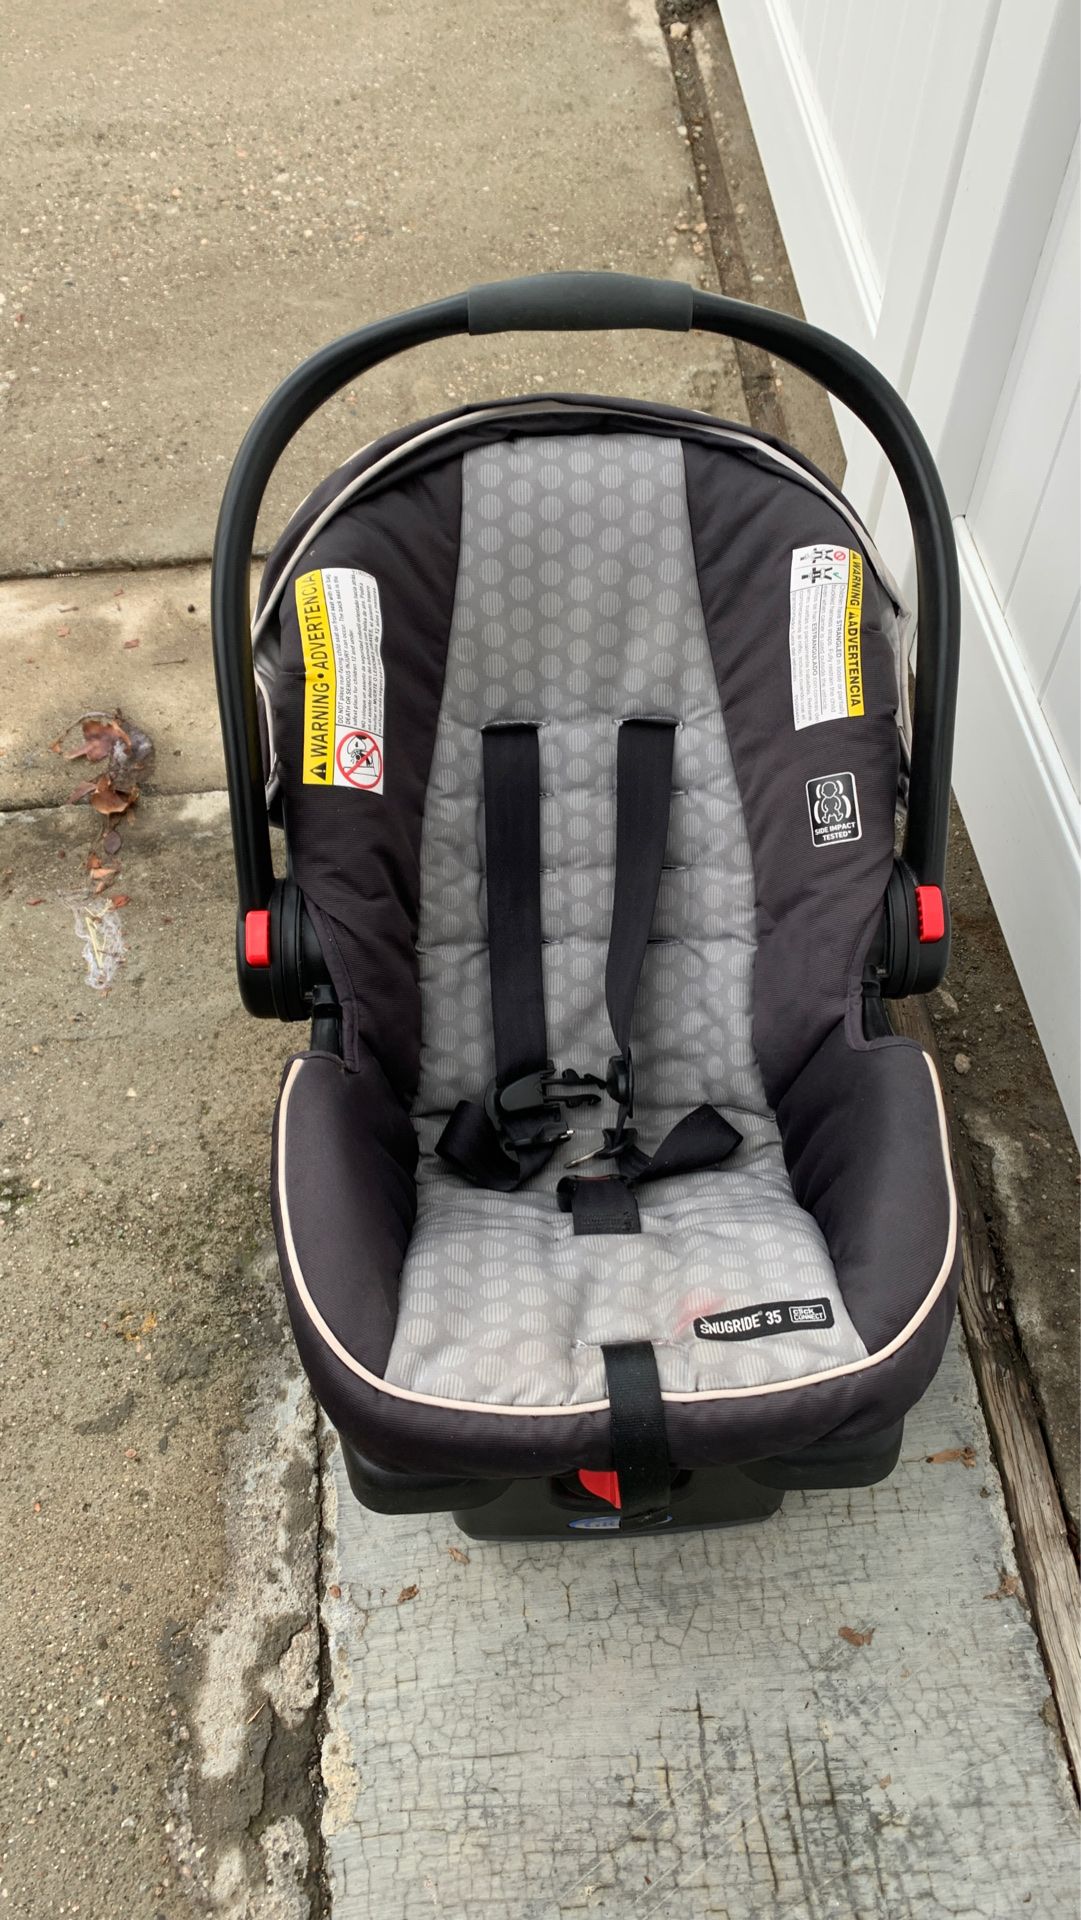 Graco infant car seat $5